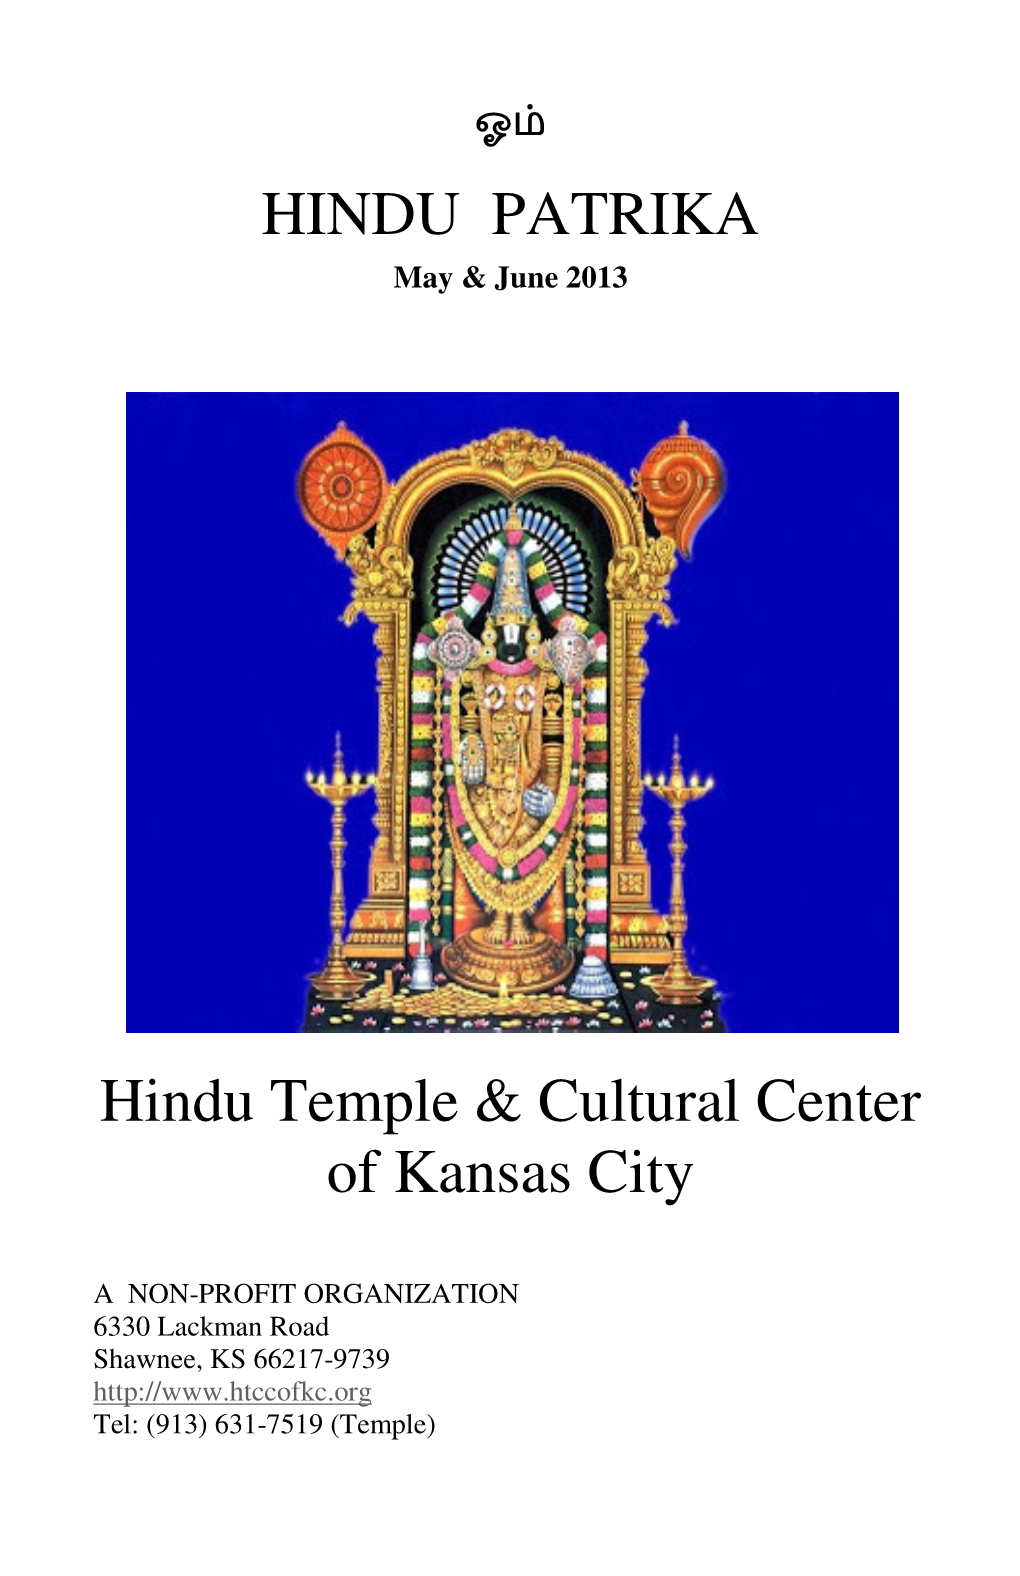 Hindu Temple & Cultural Center of Kansas City